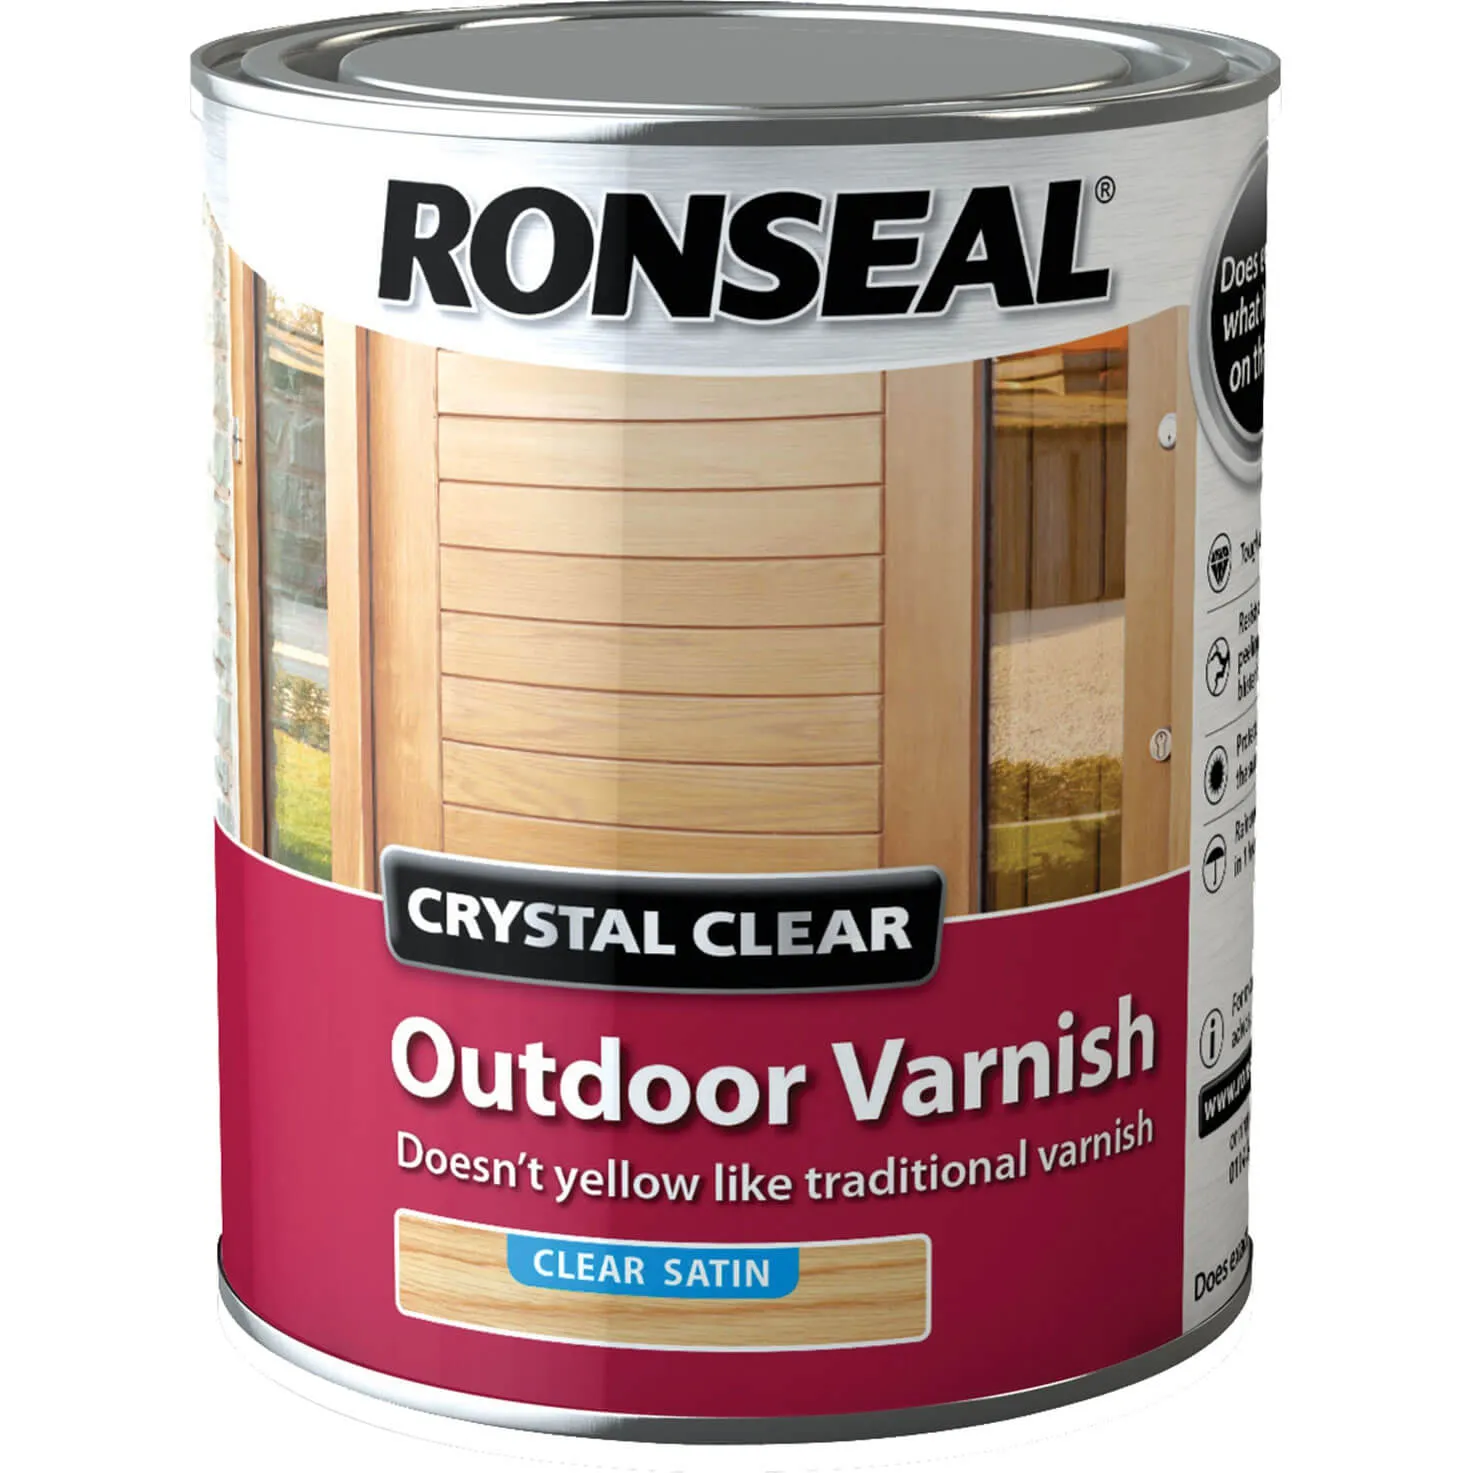 Ronseal Crystal Clear Outdoor Varnish - Satin, 750ml